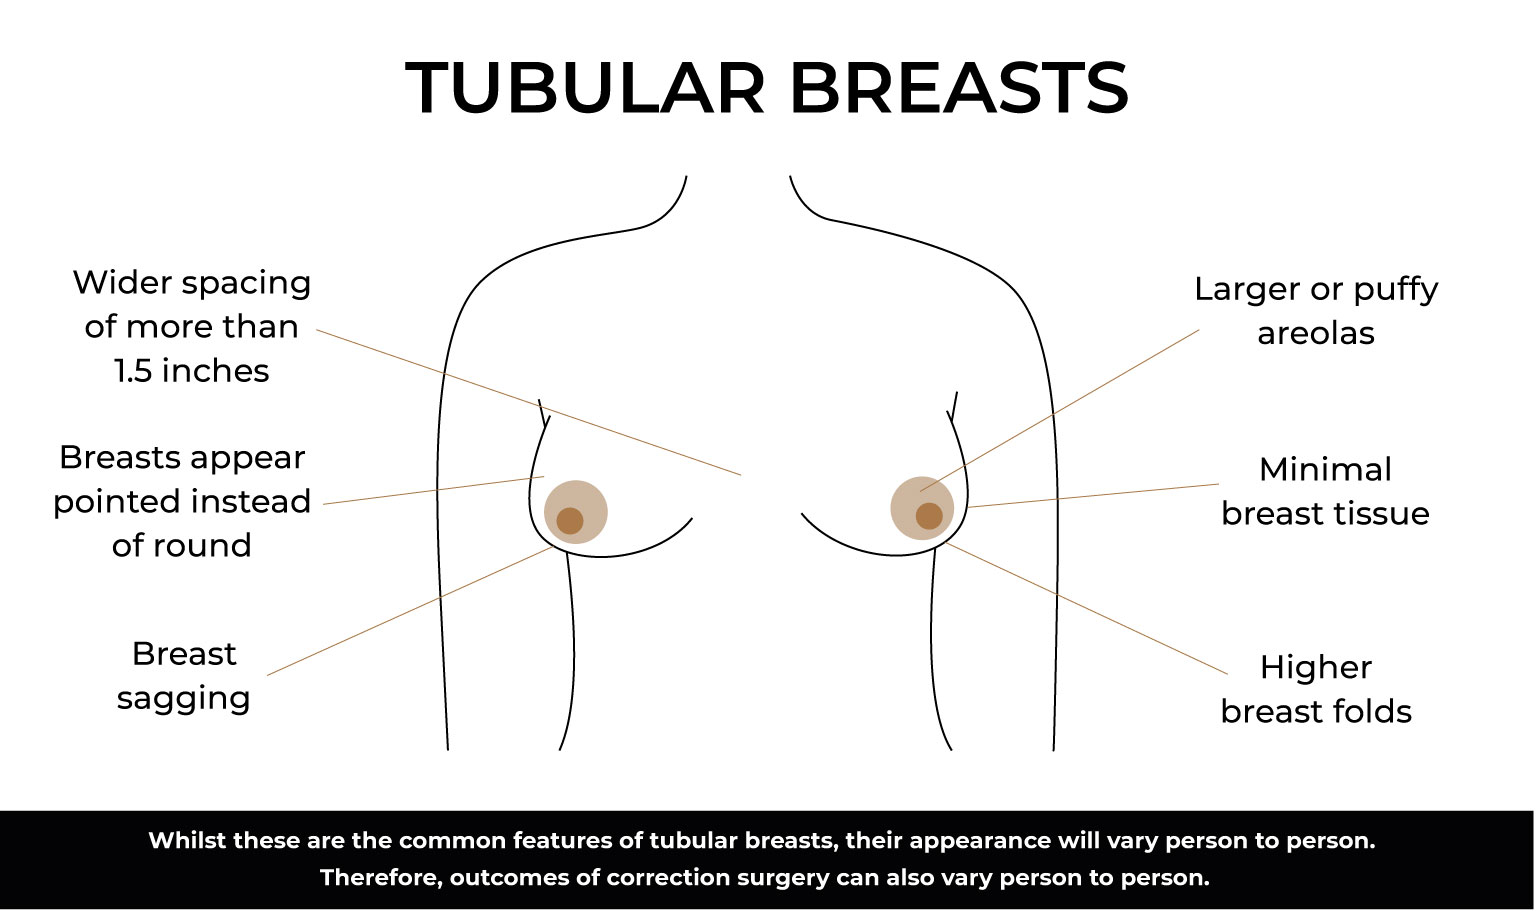 Tubular Breasts